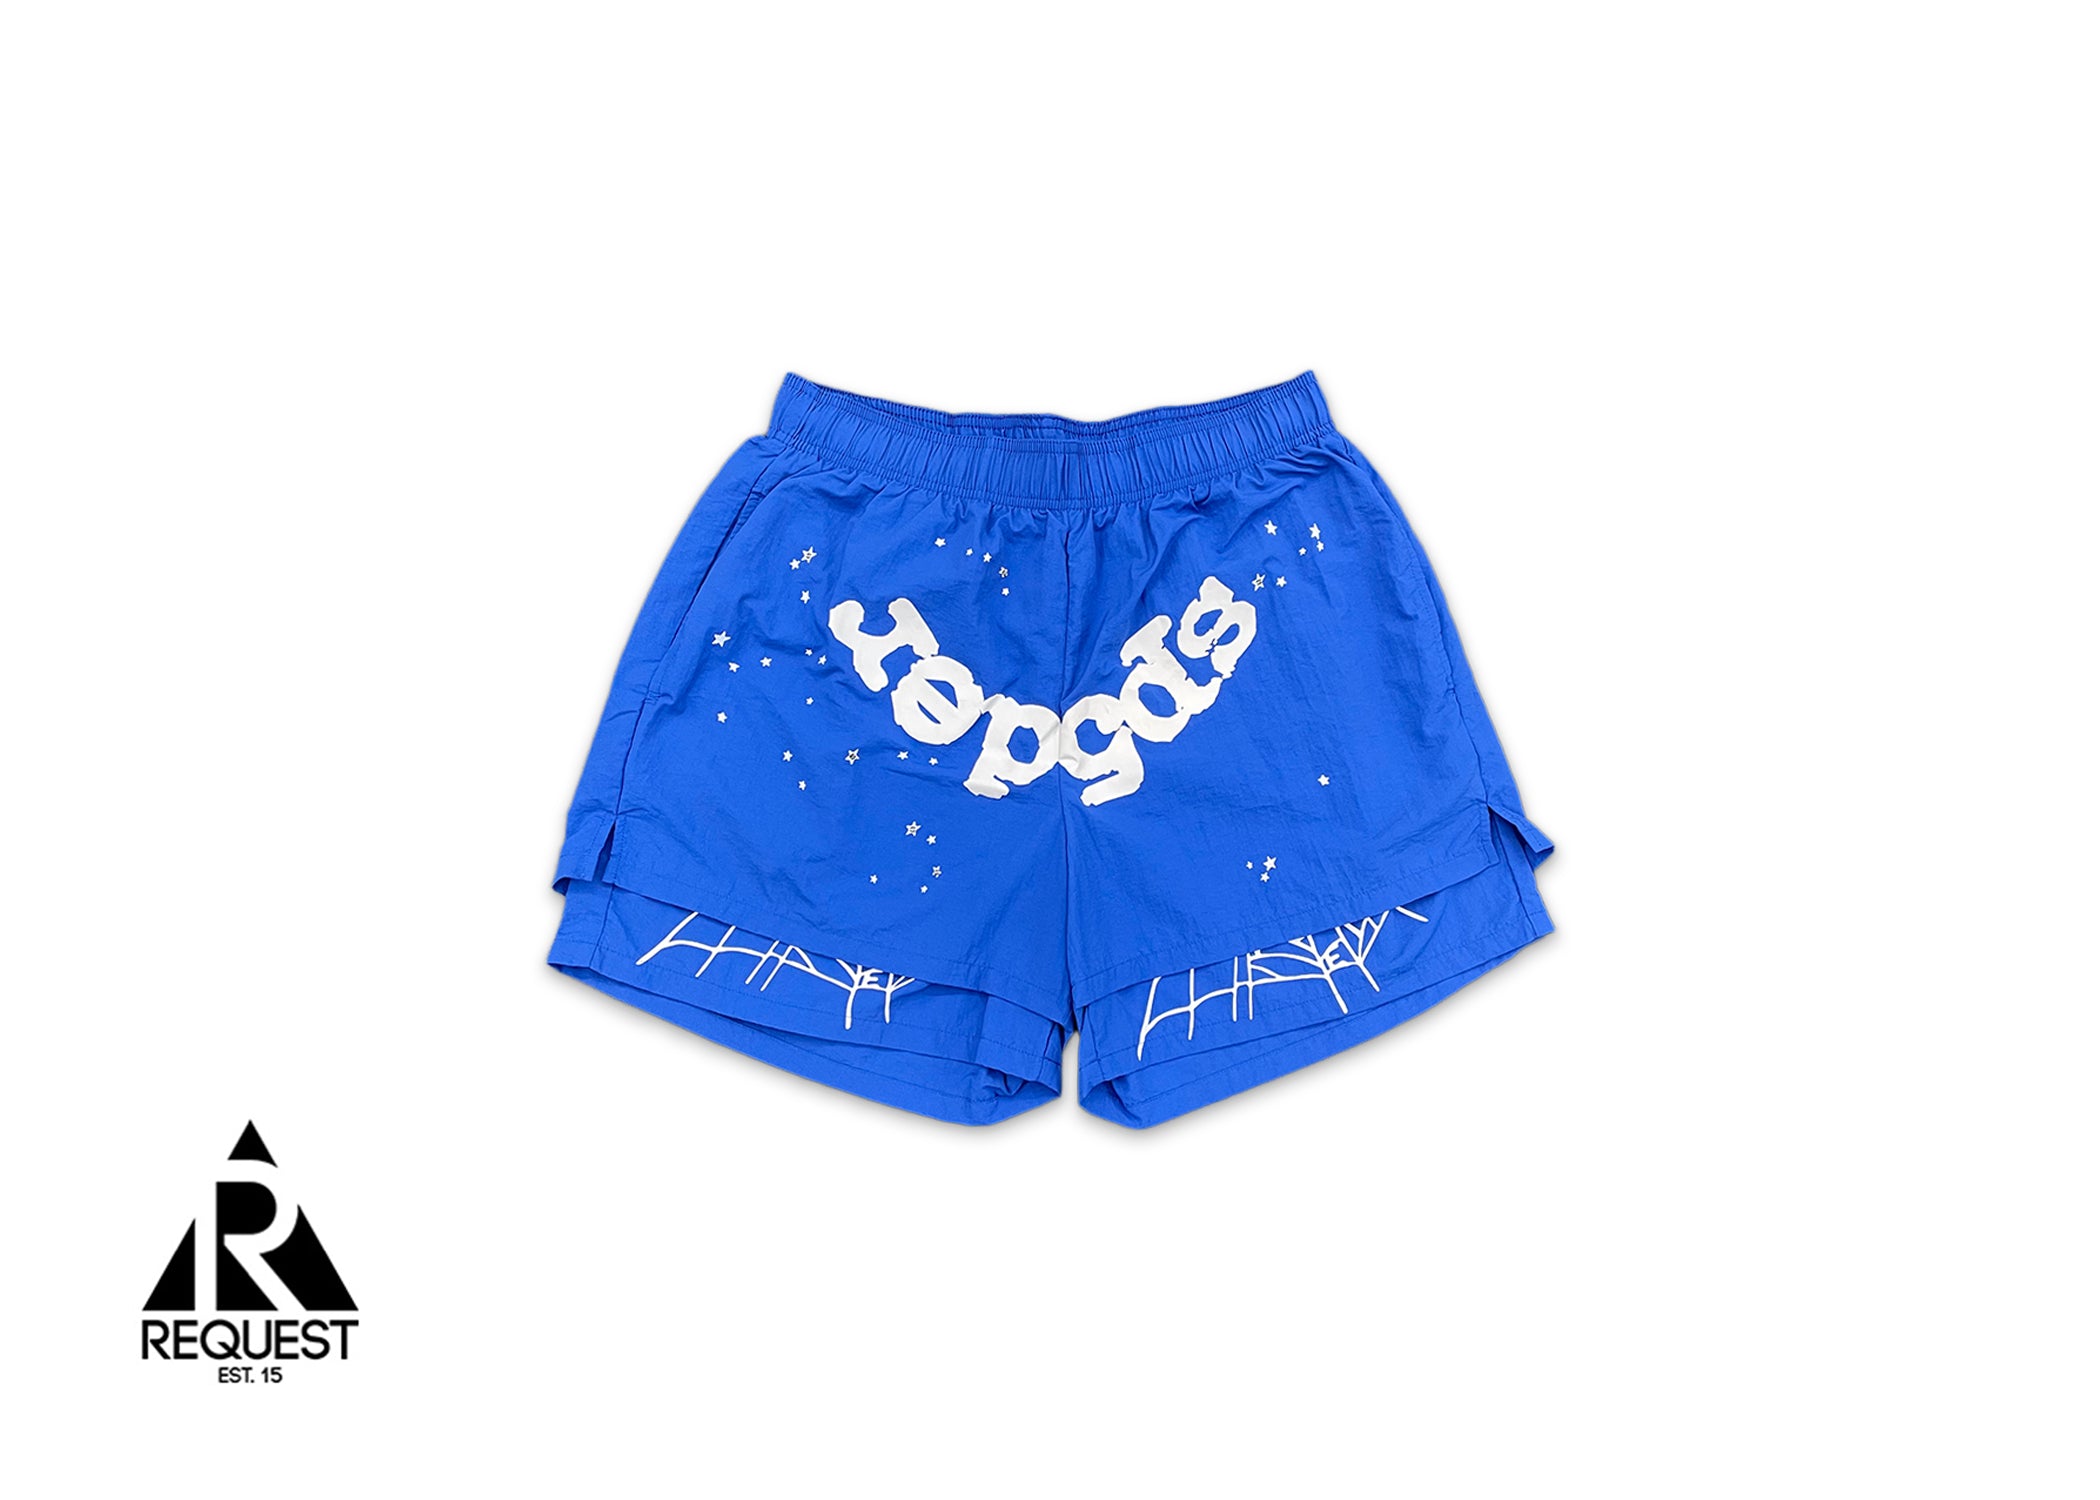 OG Web V2 Double Layer Shorts "Blue"